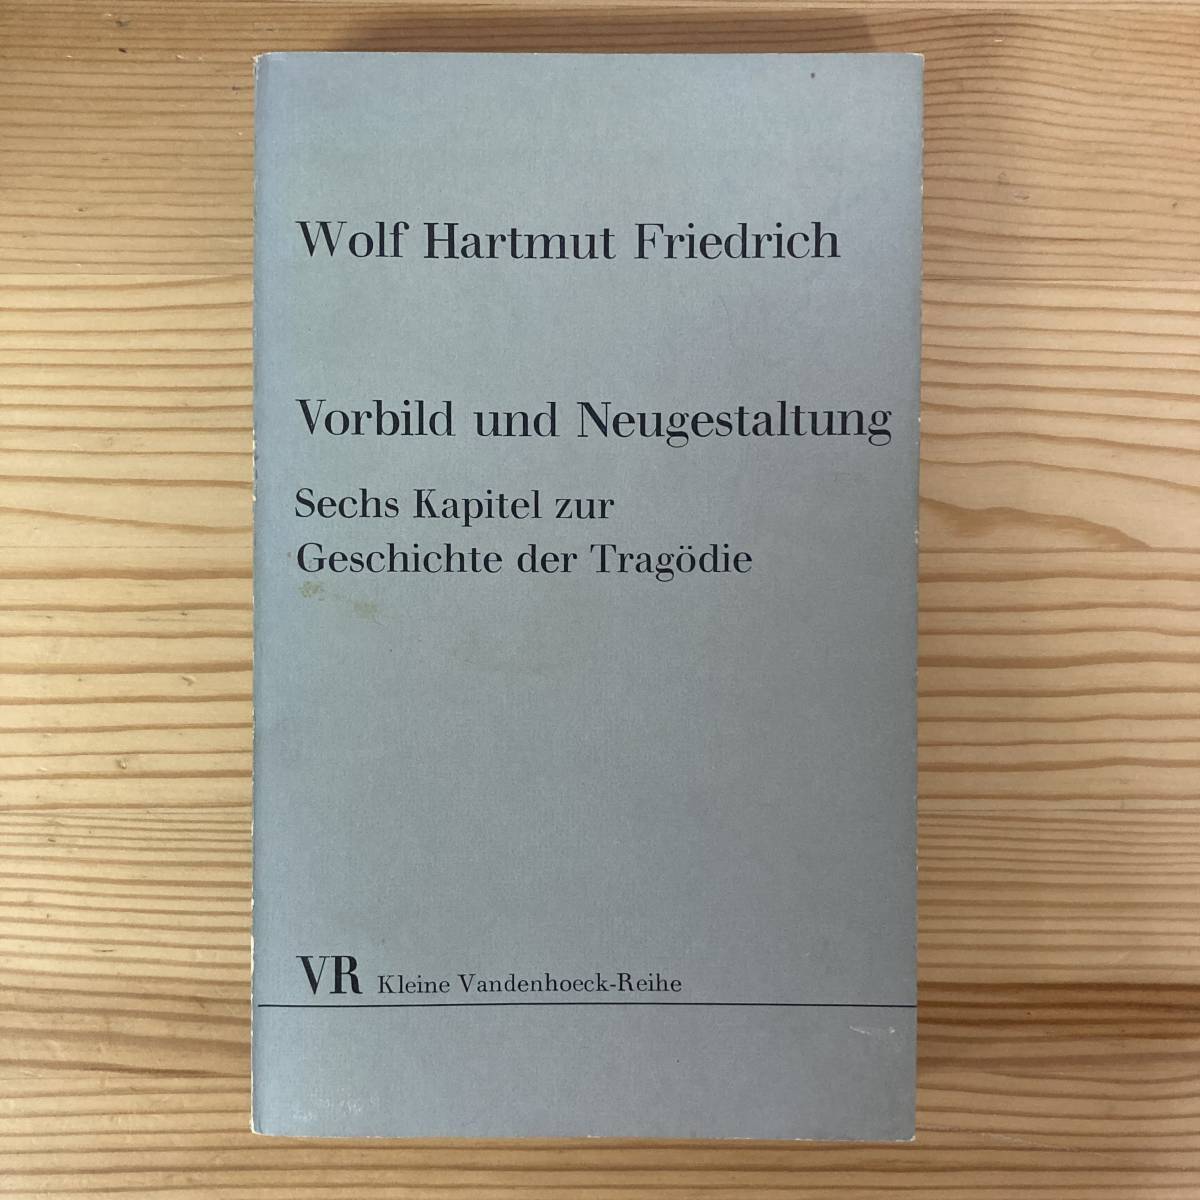 【独語洋書】Vorbild und Neugestaltung / Wolf Hartmut Friedrich（著）【古典文献学 古代ギリシャ】_画像1